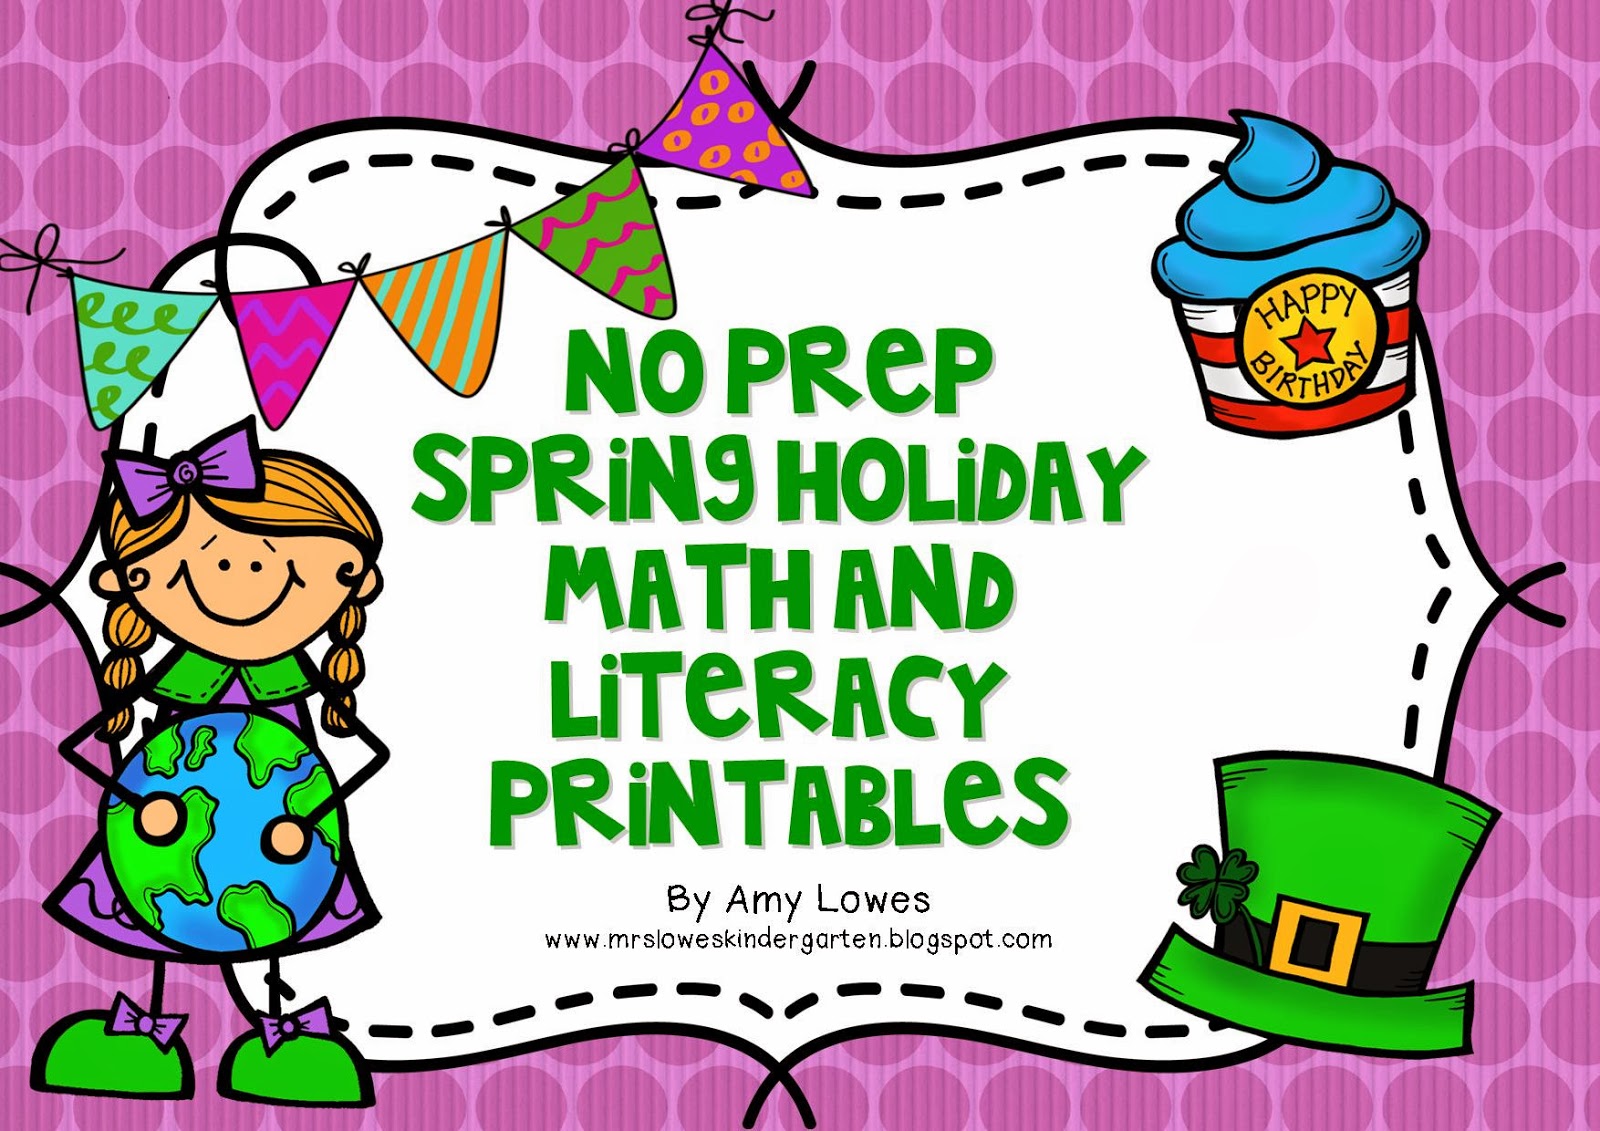 http://www.teacherspayteachers.com/Product/No-Prep-Spring-Holiday-Math-and-Literacy-Printables-1119492